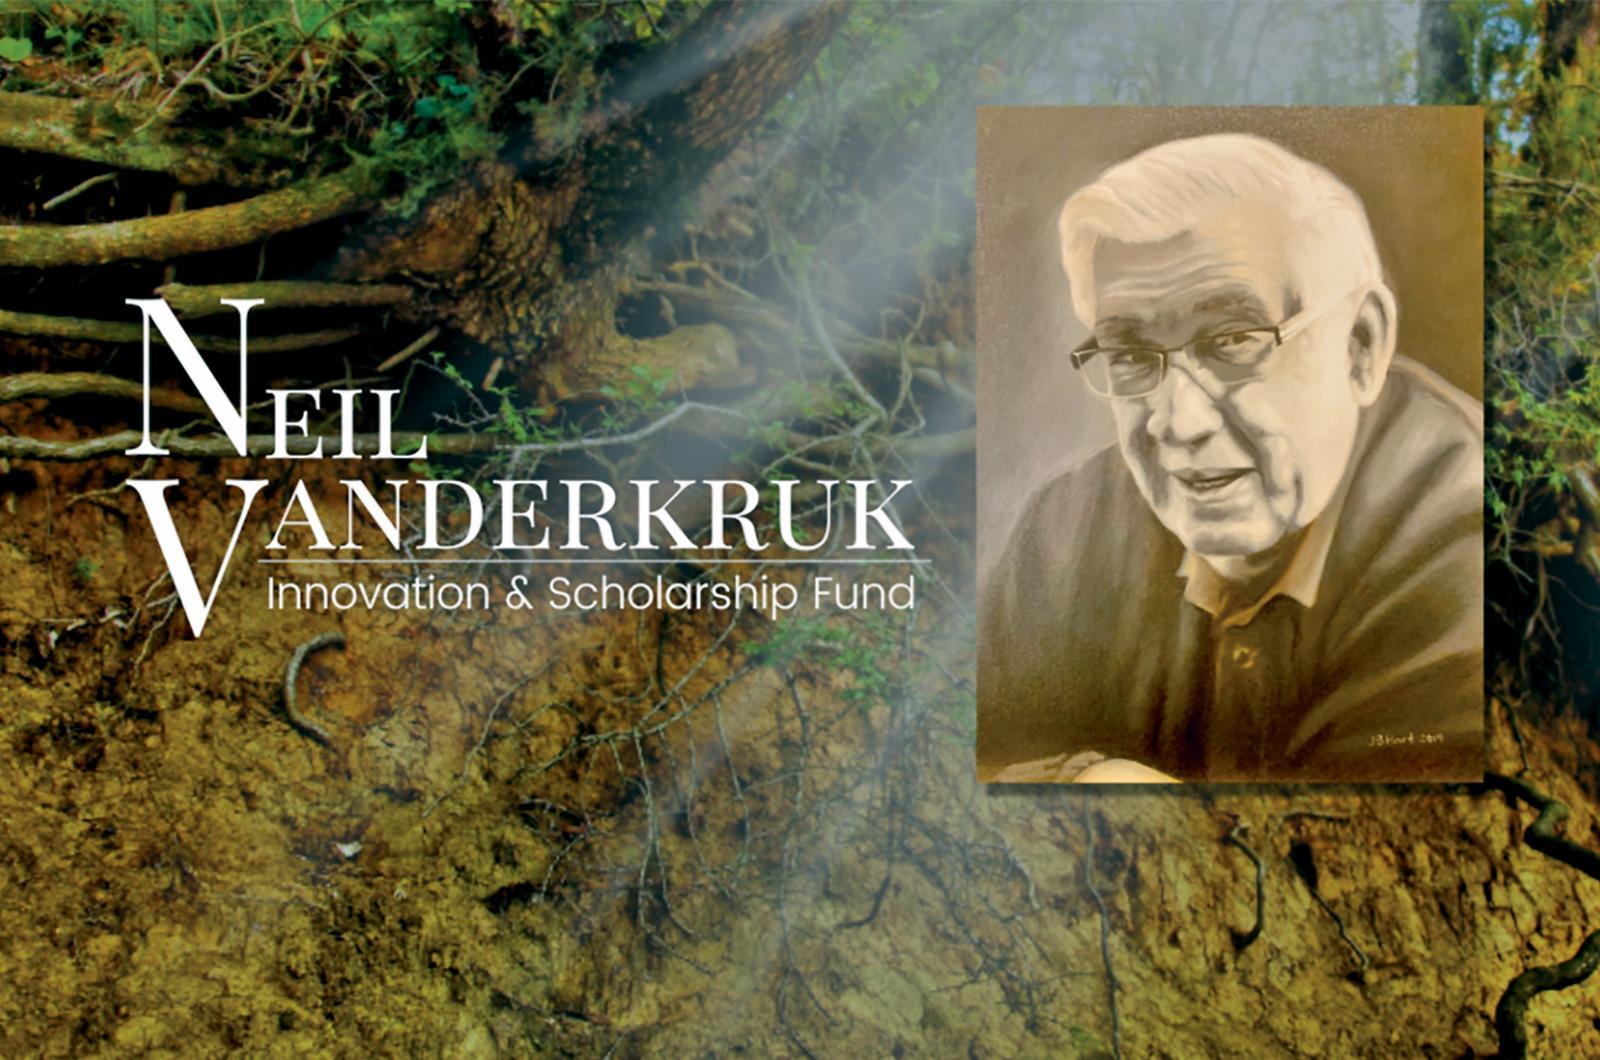 The Ontario Horticultural Trades Foundation creates the Neil Vanderkruk Innovation & Scholarship Fund 